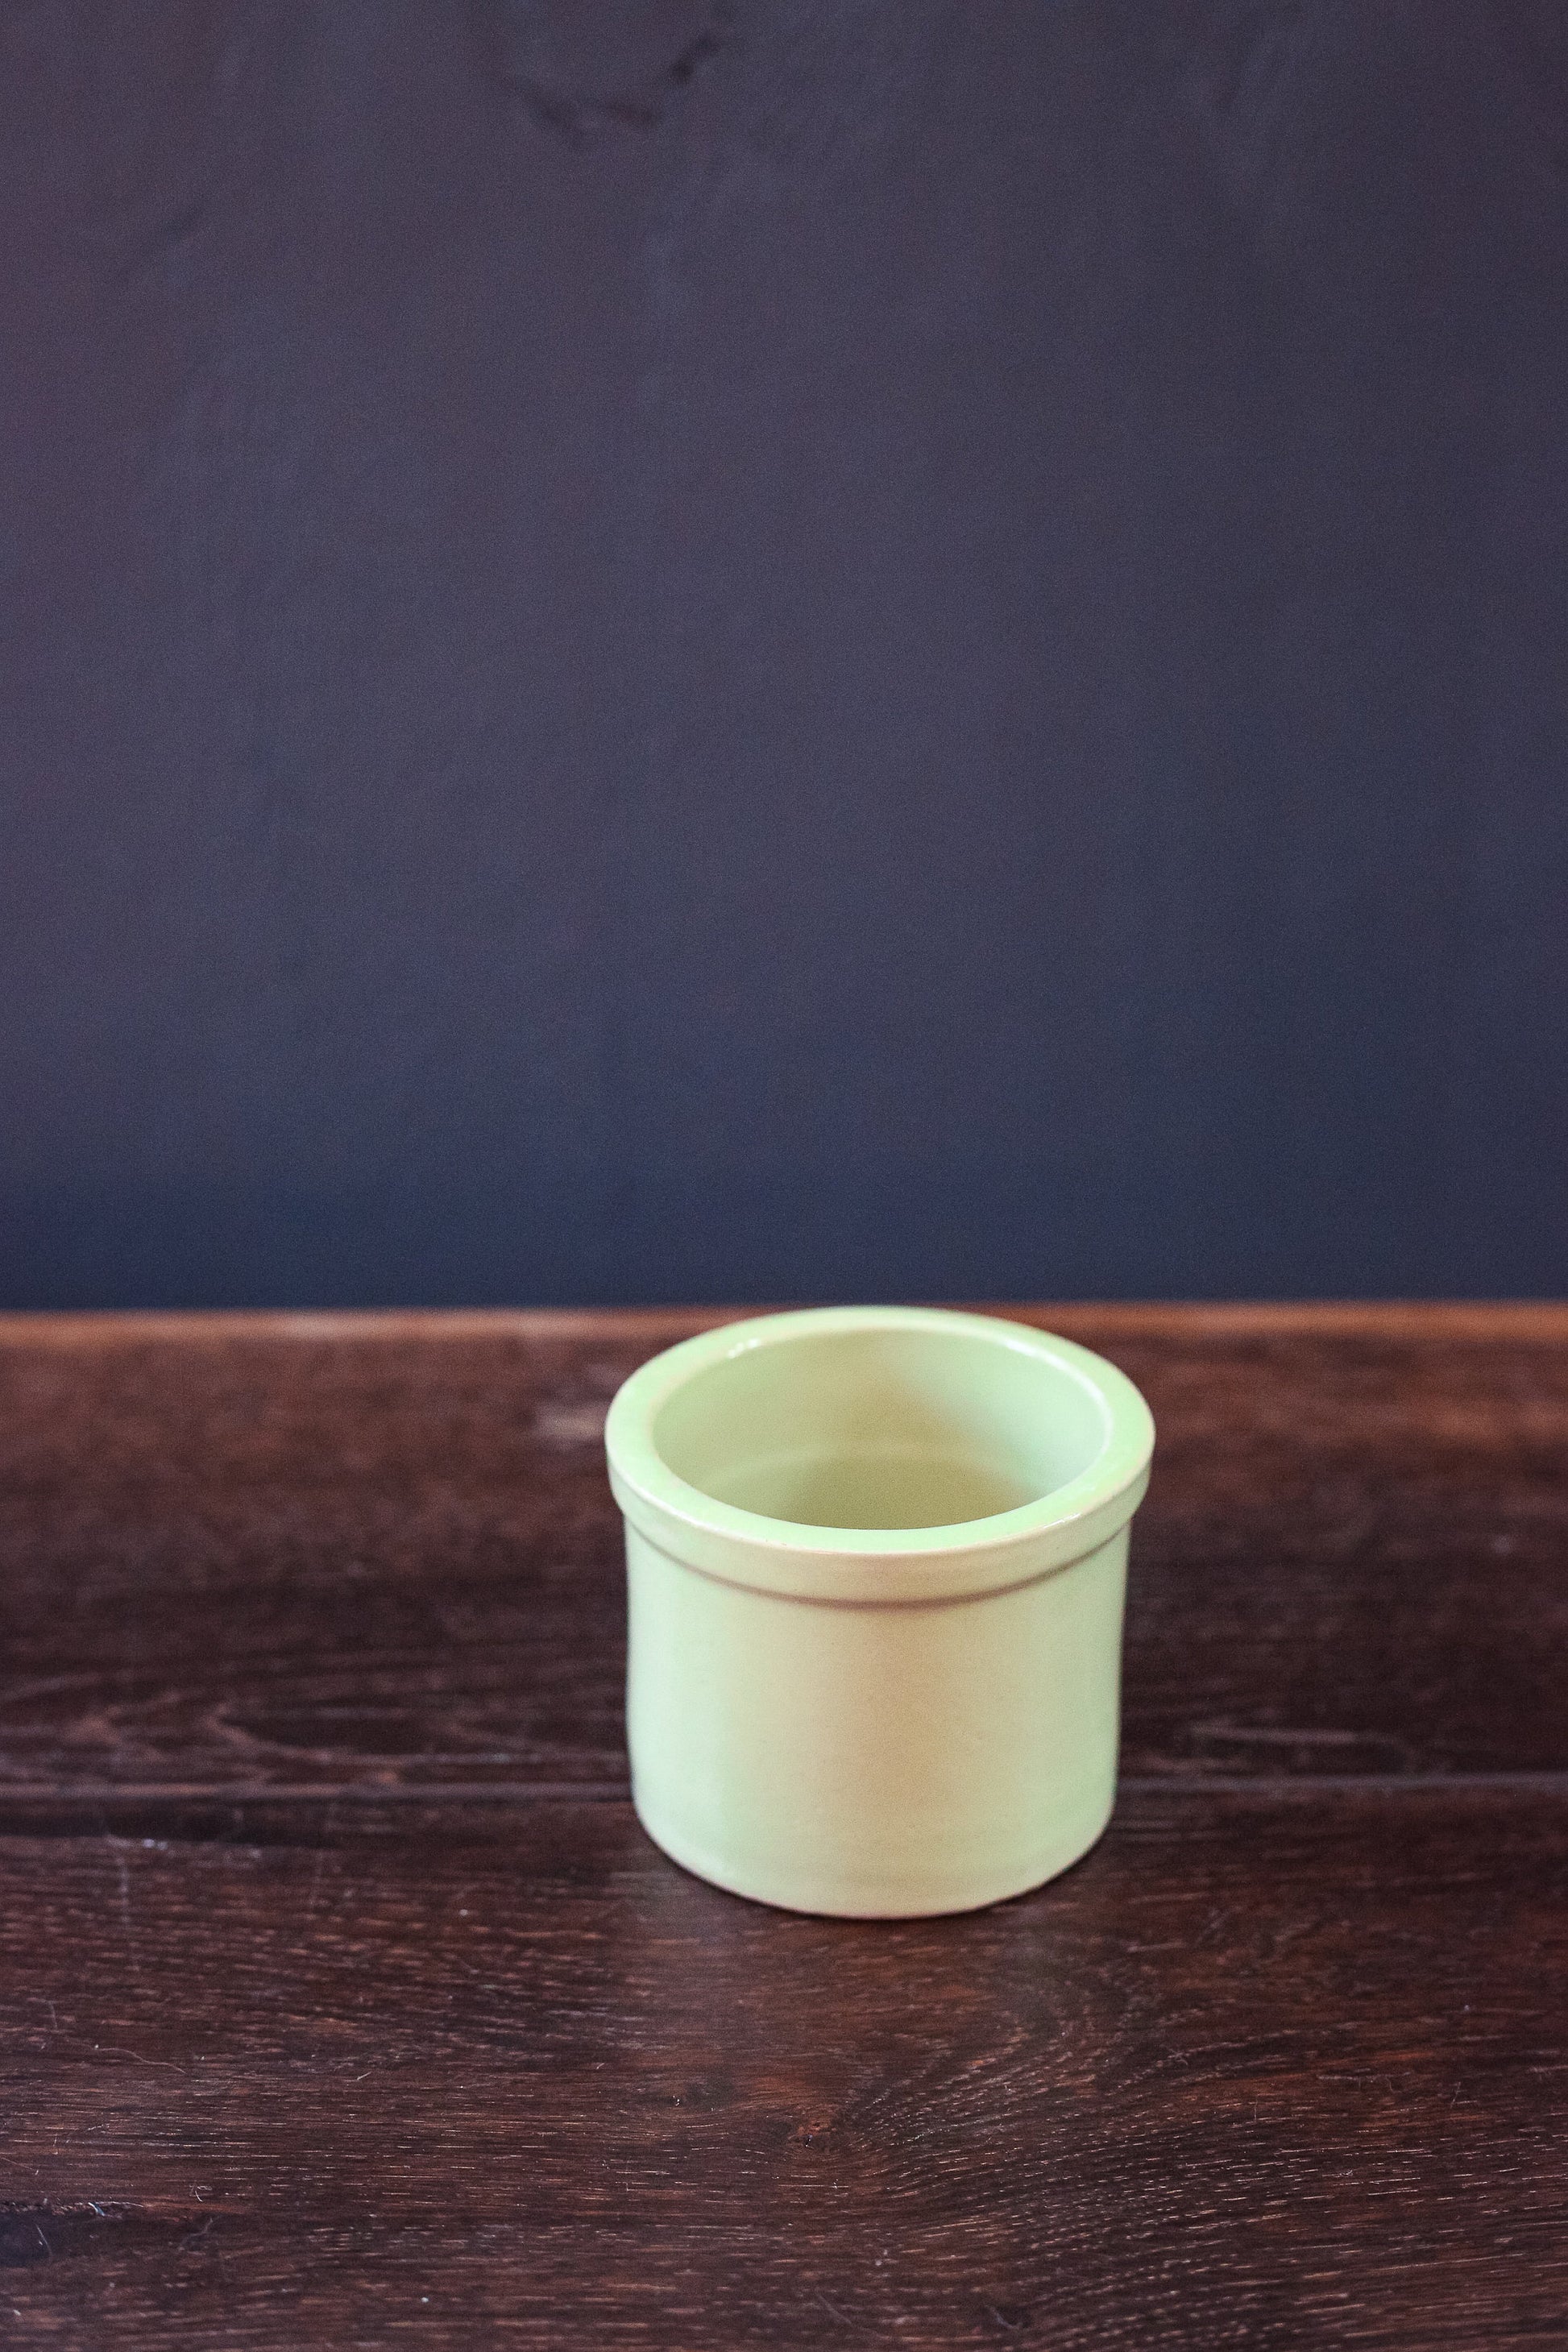 Mini Pistachio Green Cache Pot - Vintage Ceramic Container